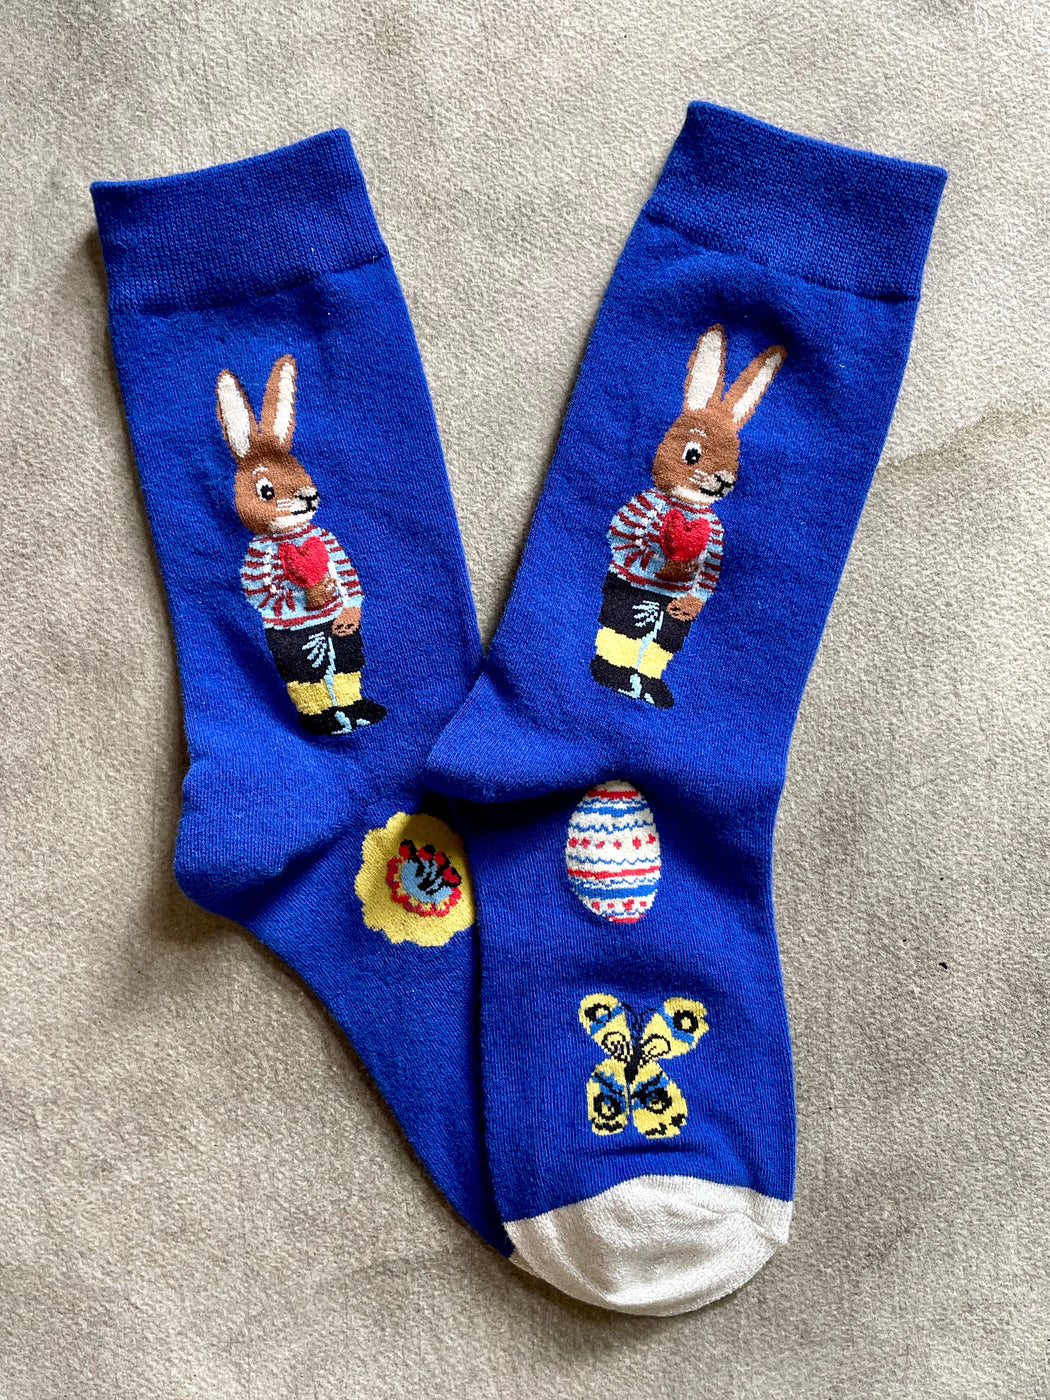 "Bunny Love" Socks by Nathalie Lete